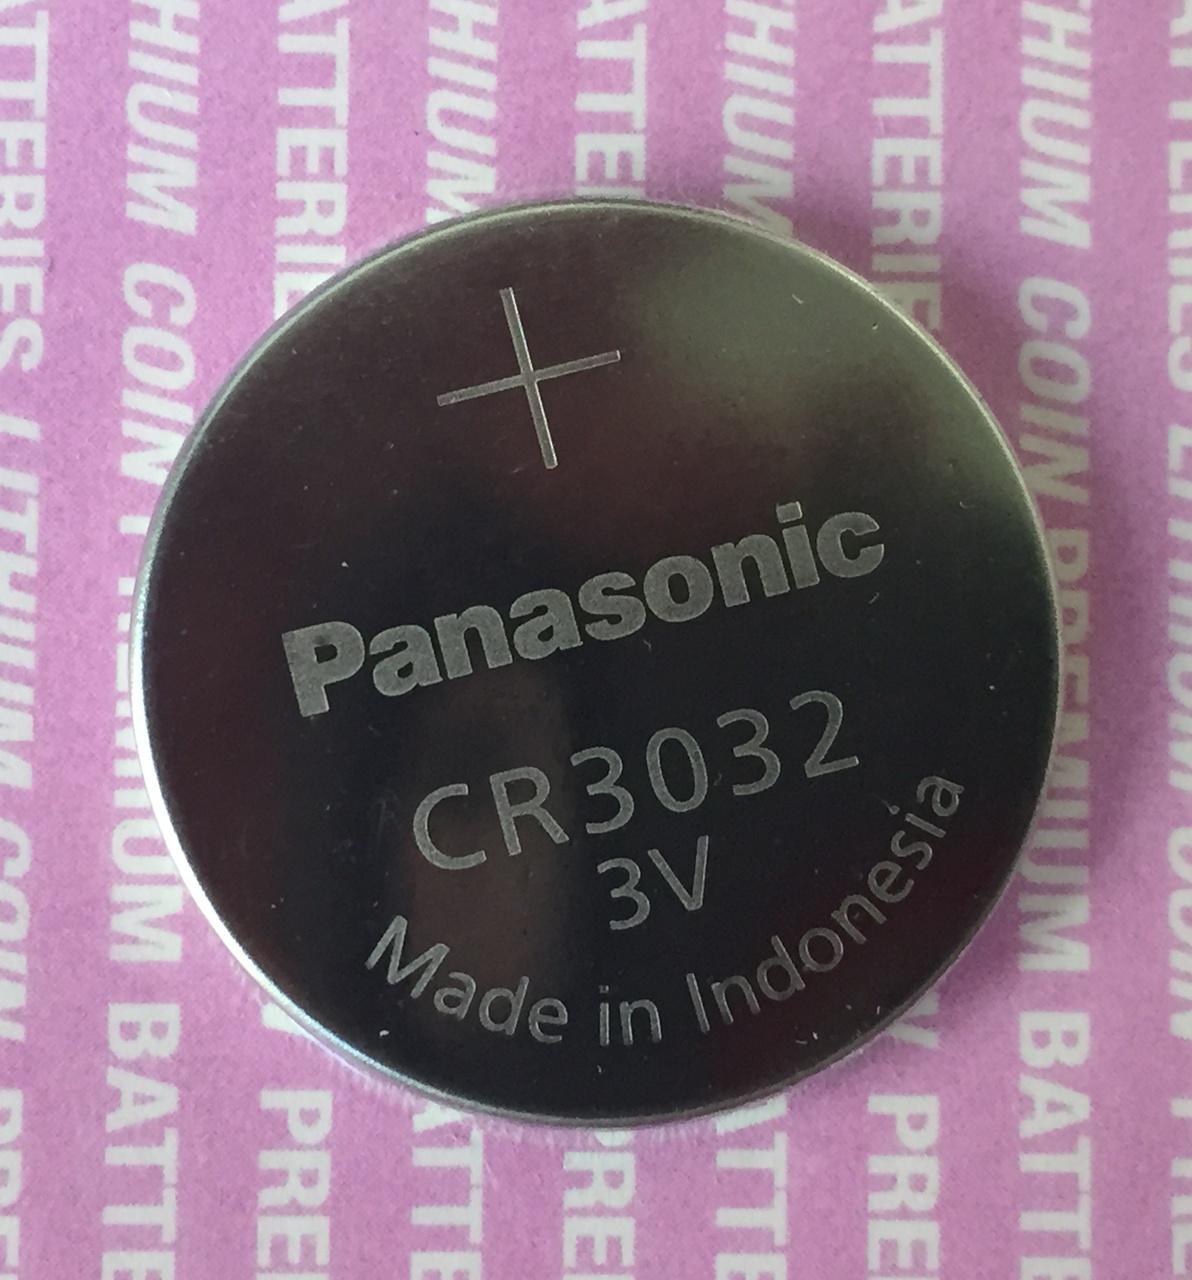 Panasonic CR3032 3V Lithium Coin Battery - 1 Battery + FREE SHIPPING!